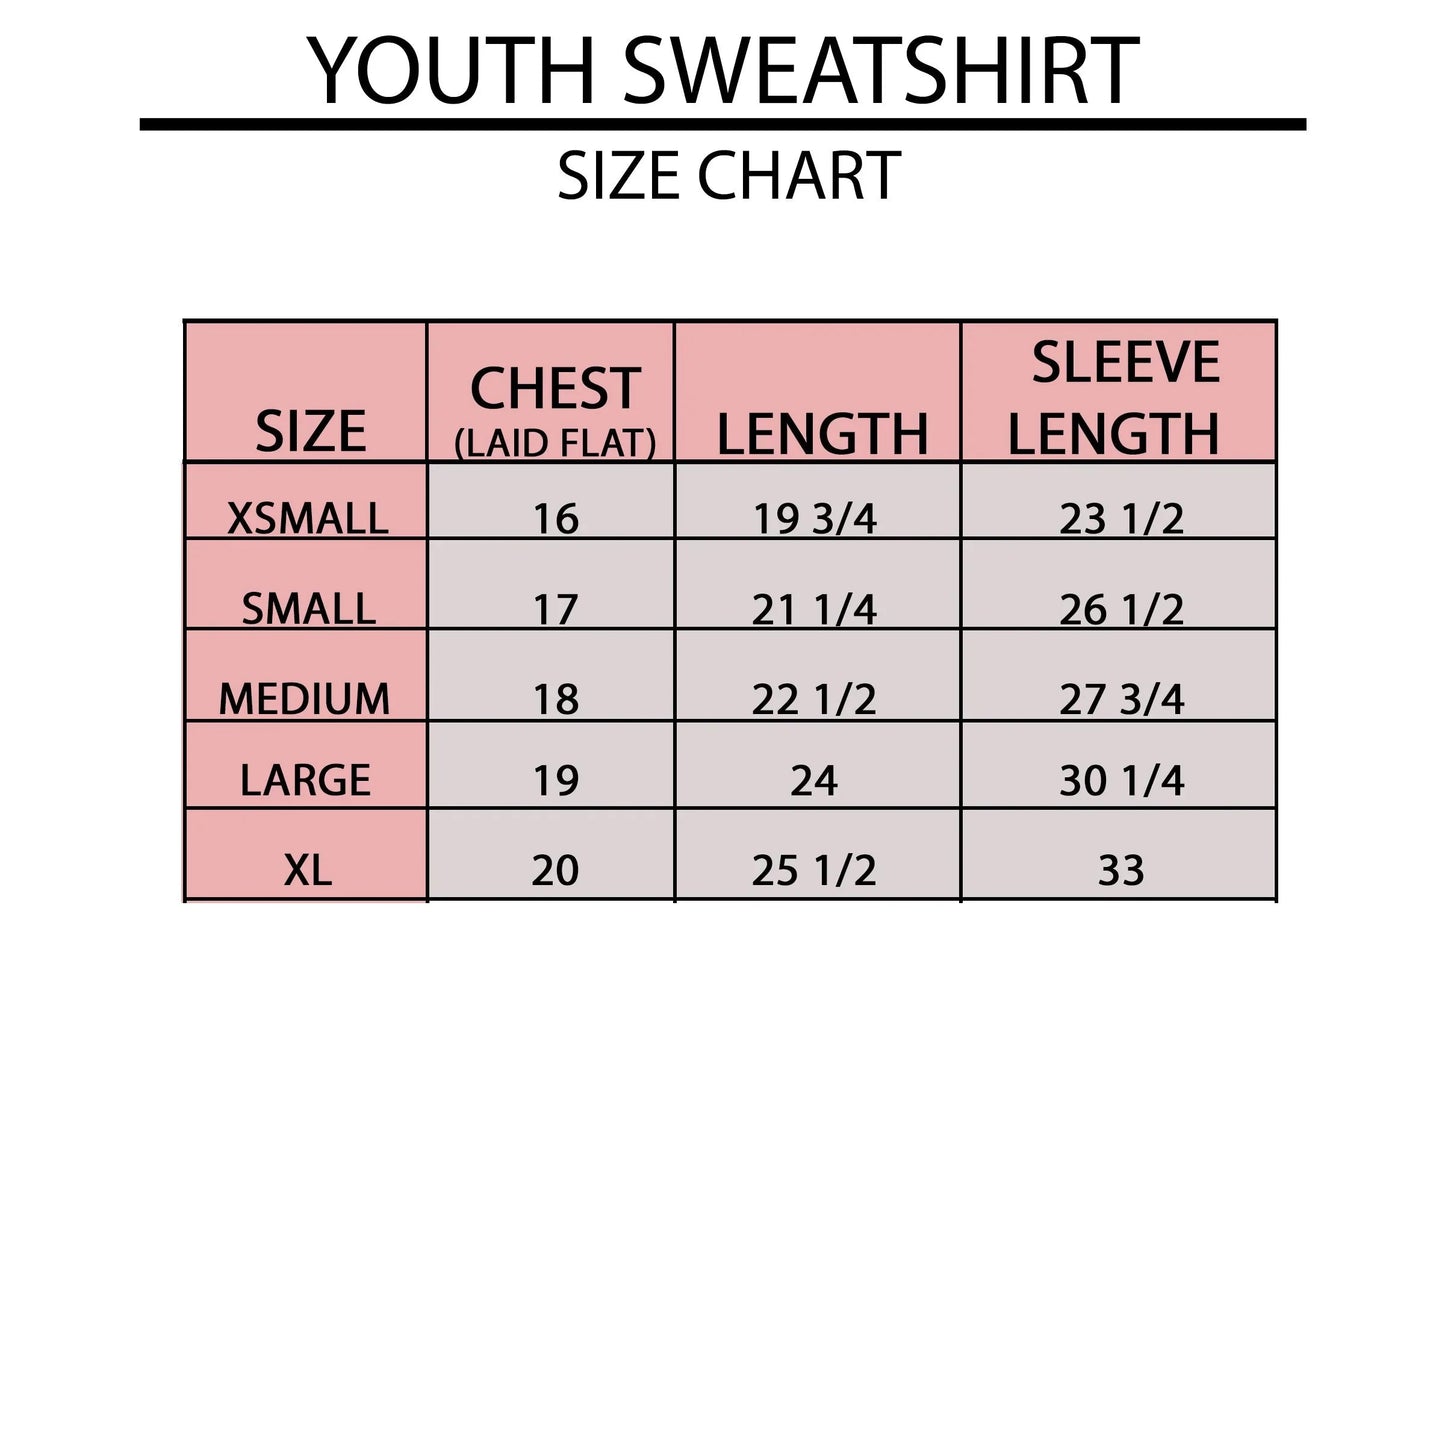 Little Cotton Tail | Youth Sweatshirt